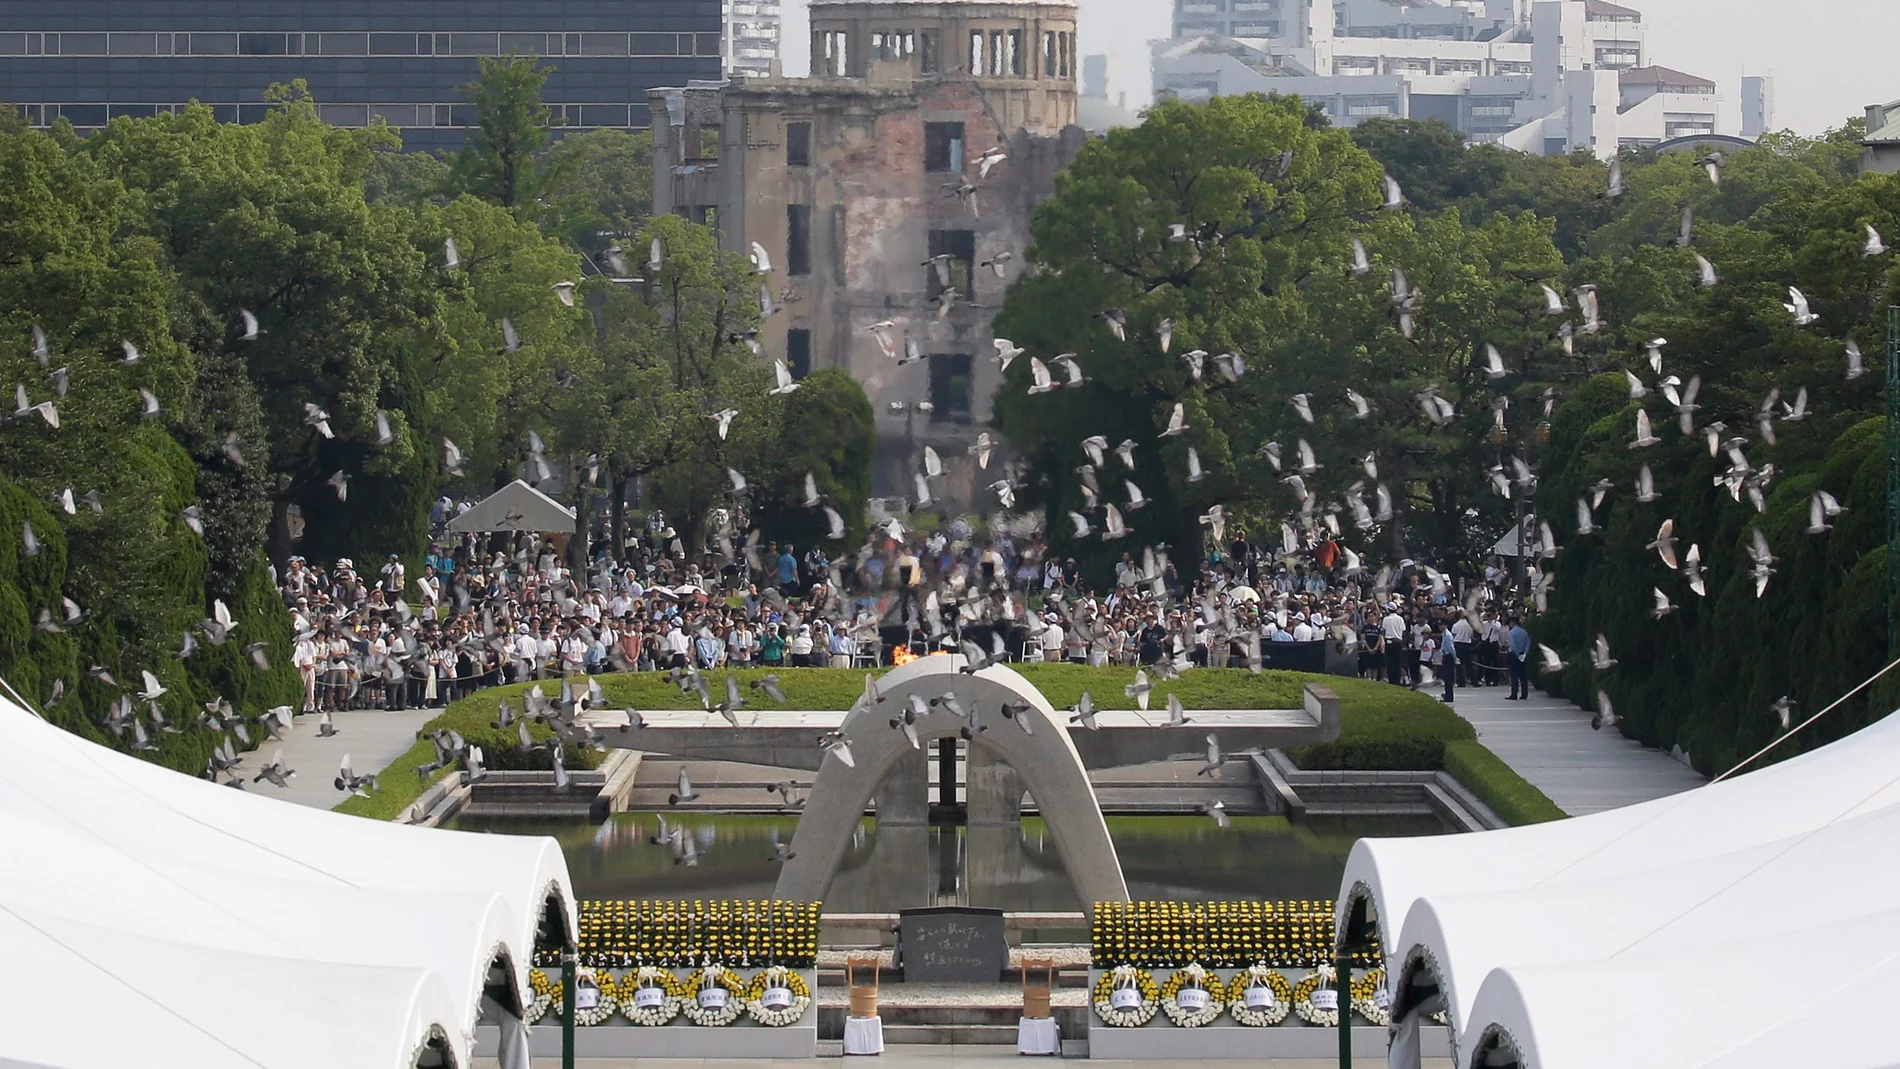 Palomas volando durante la ceremonia conmemorativa de Nagasaki